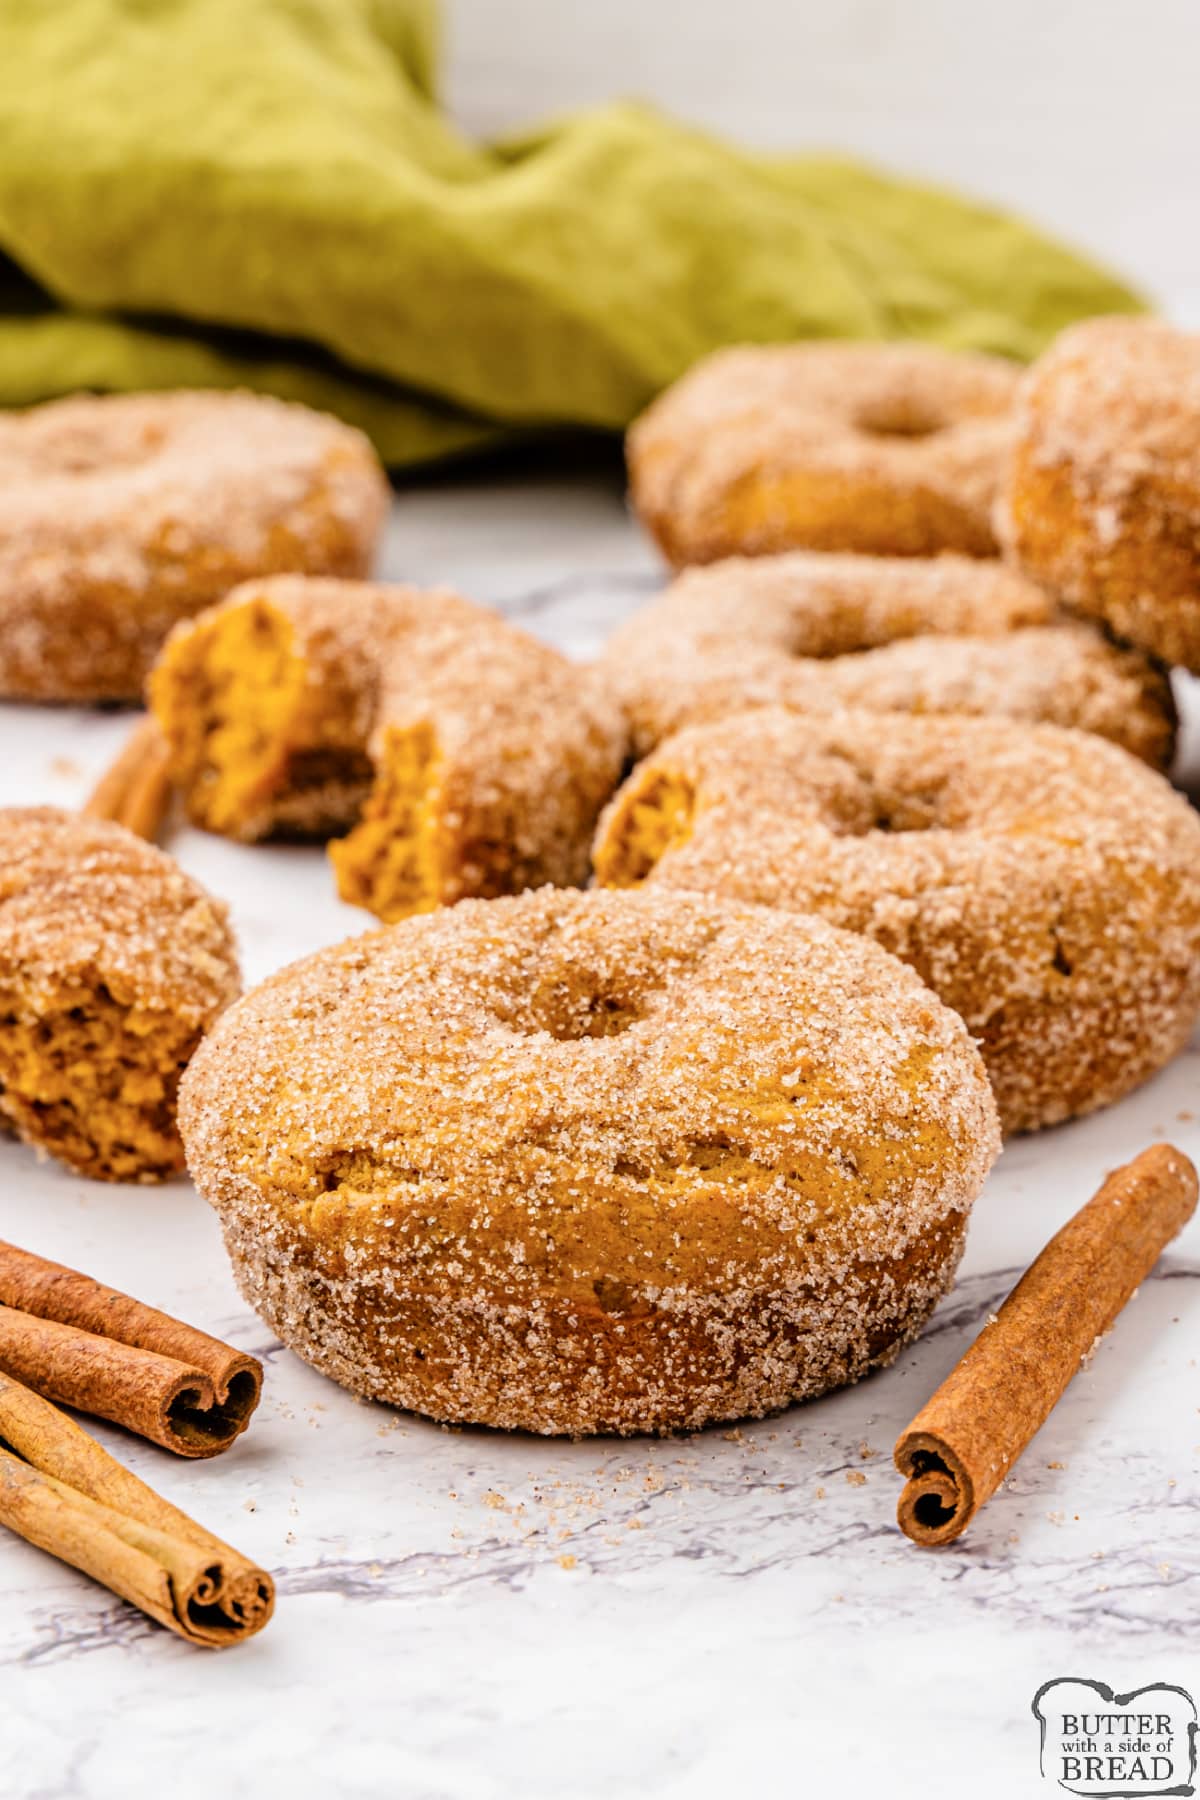 Baked pumpkin donuts with cinnamon sugar topping